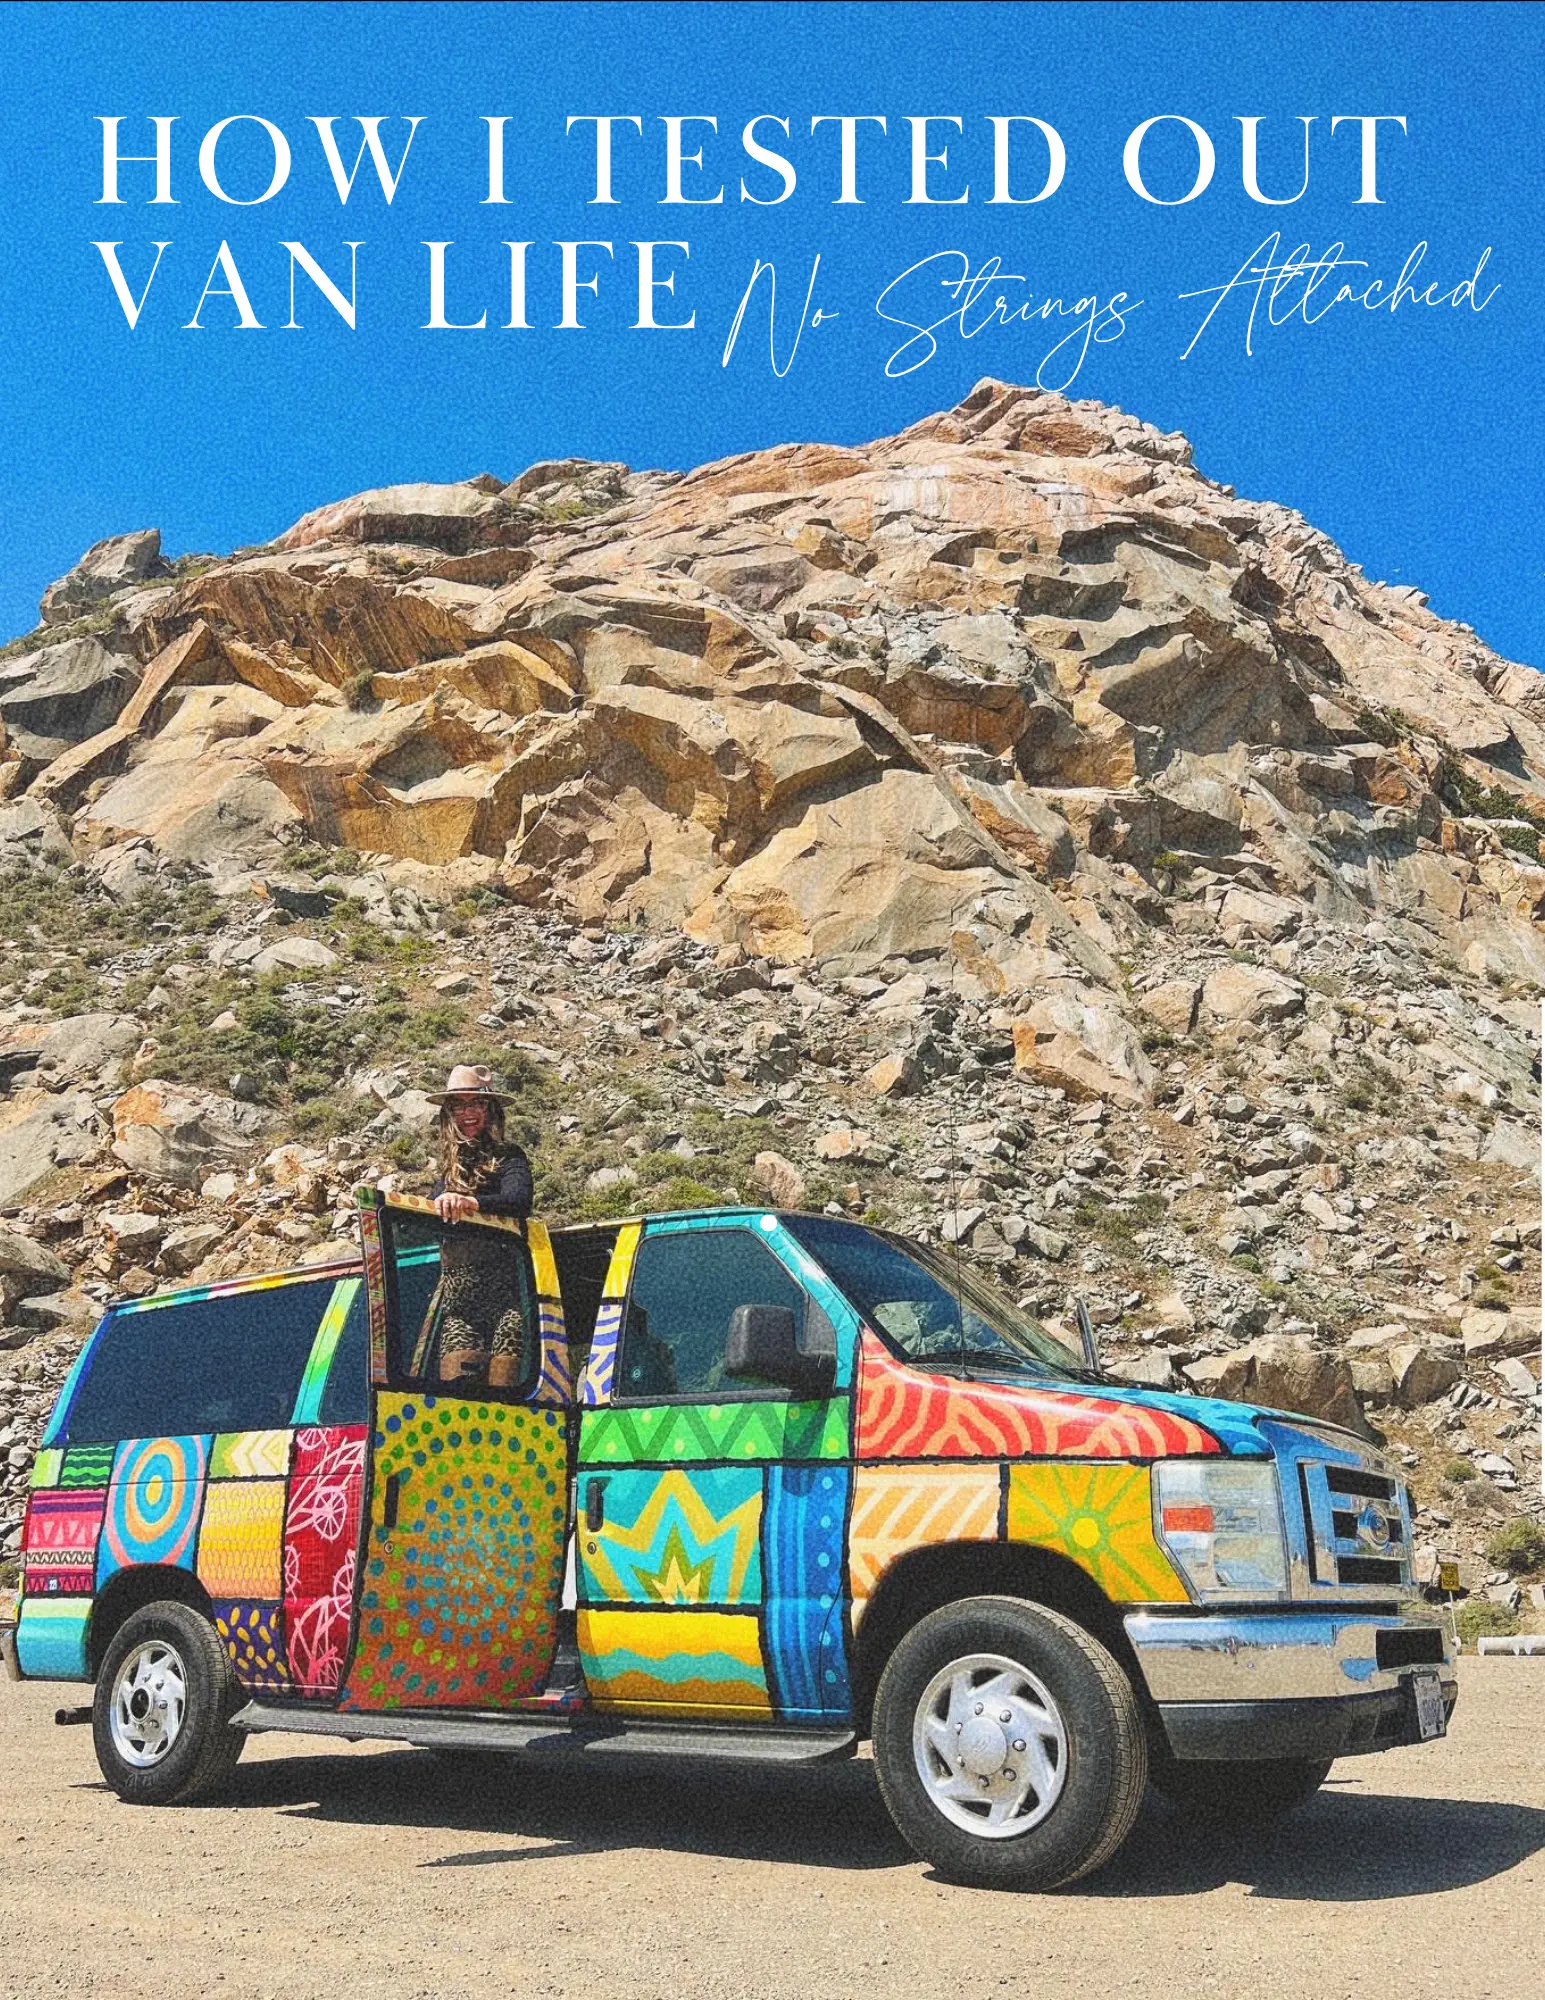 Family Van Life on The West Coast - Lemon8 Search